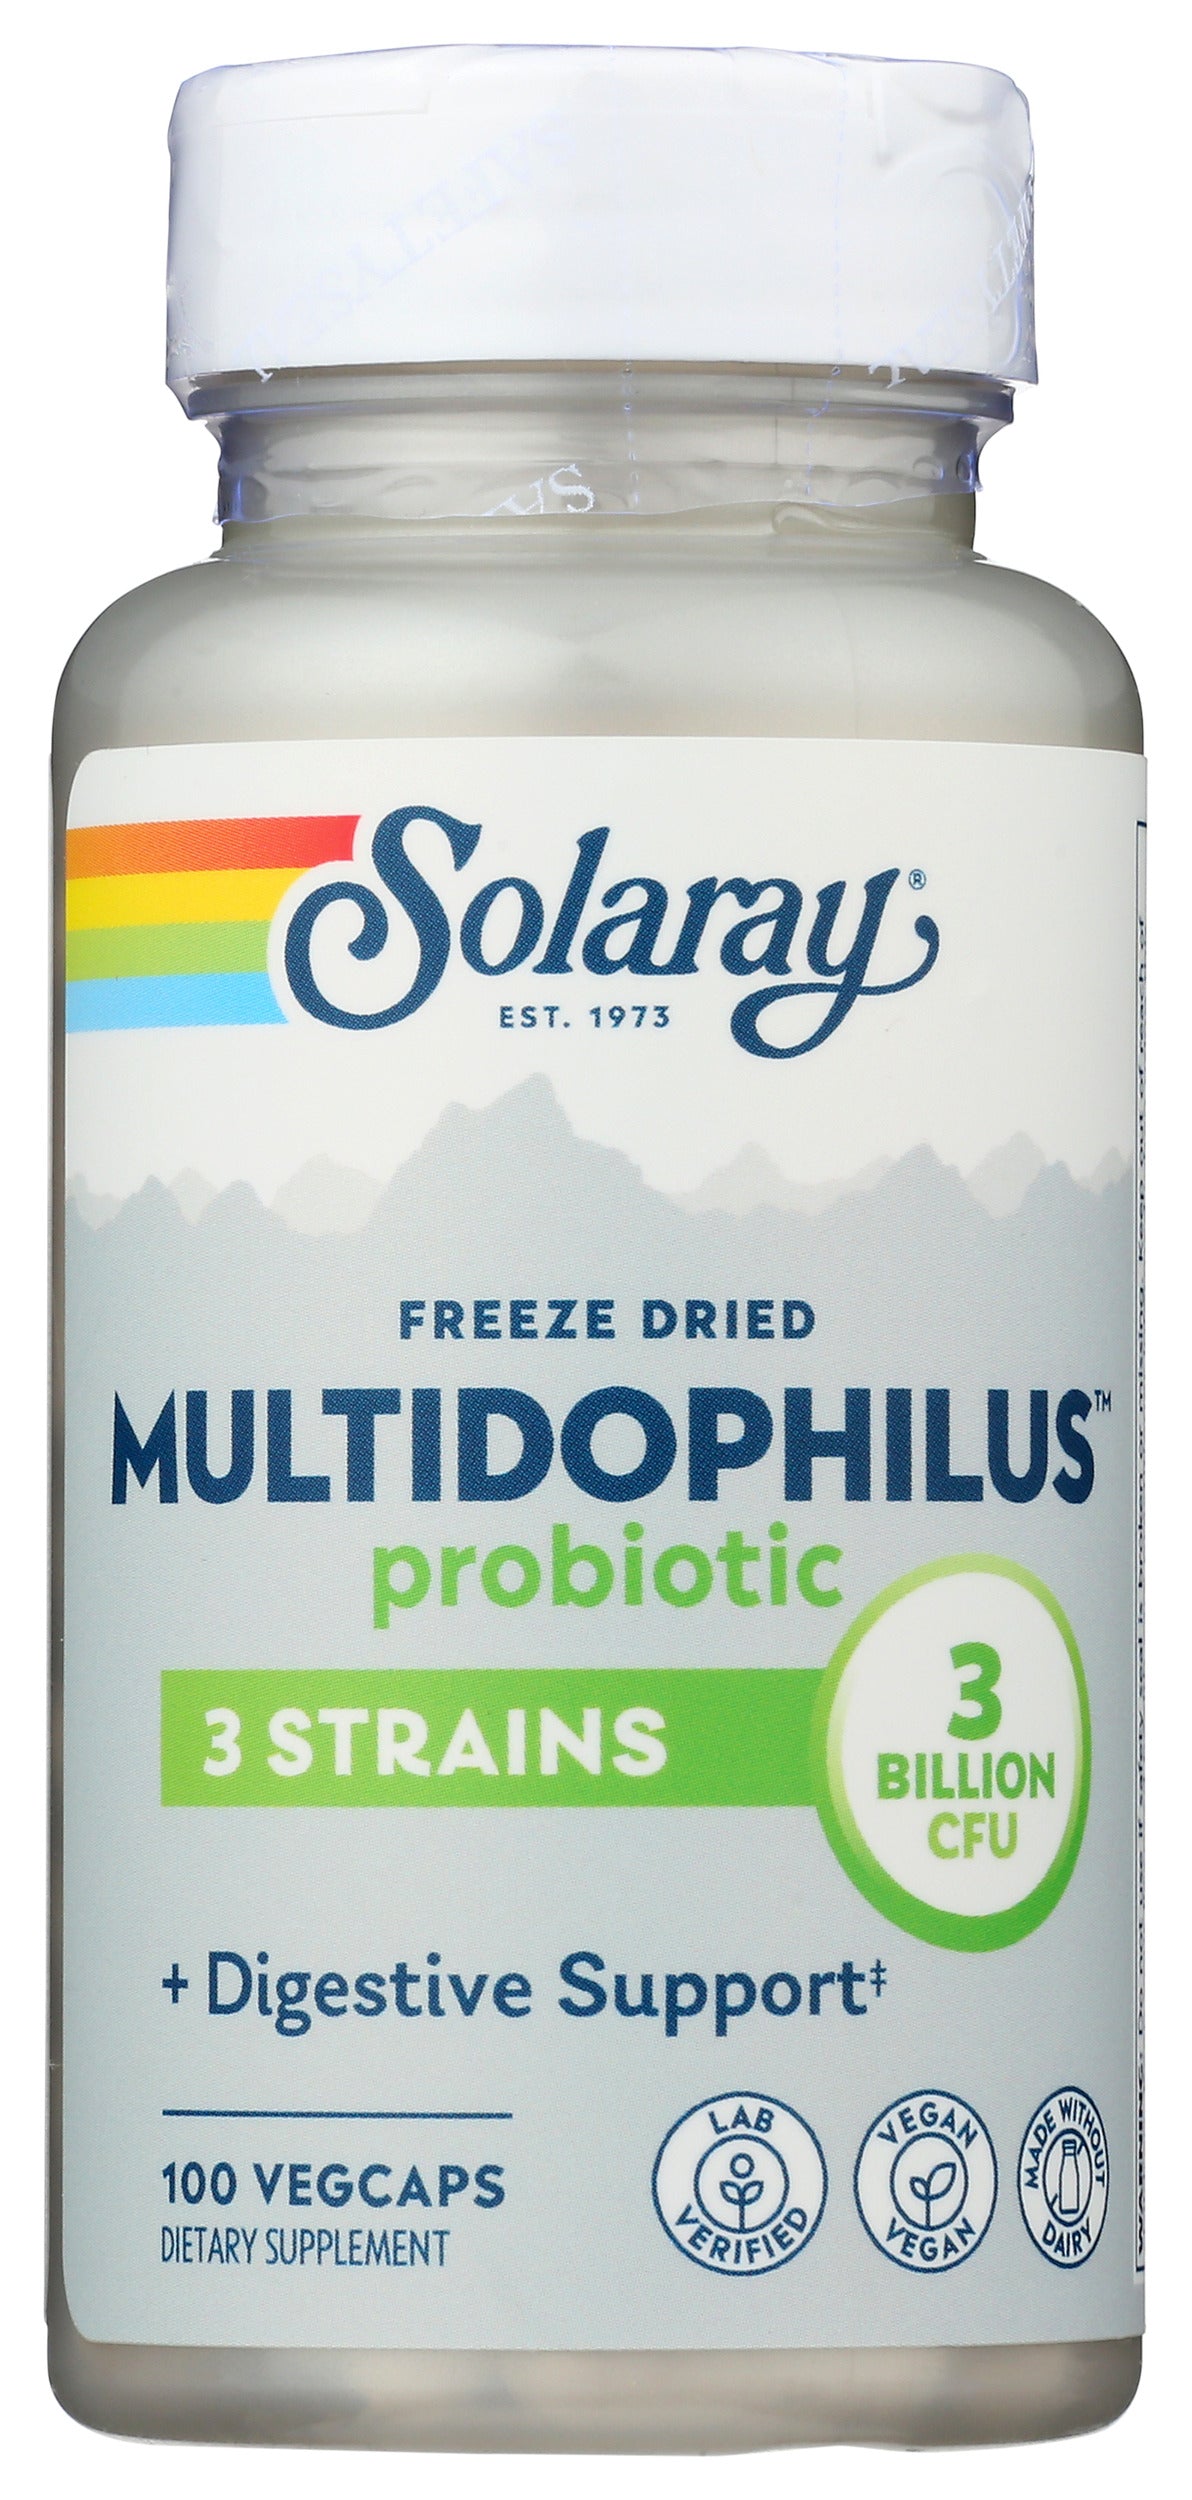 Solaray Multidophilus Probiotic Front of Bottle